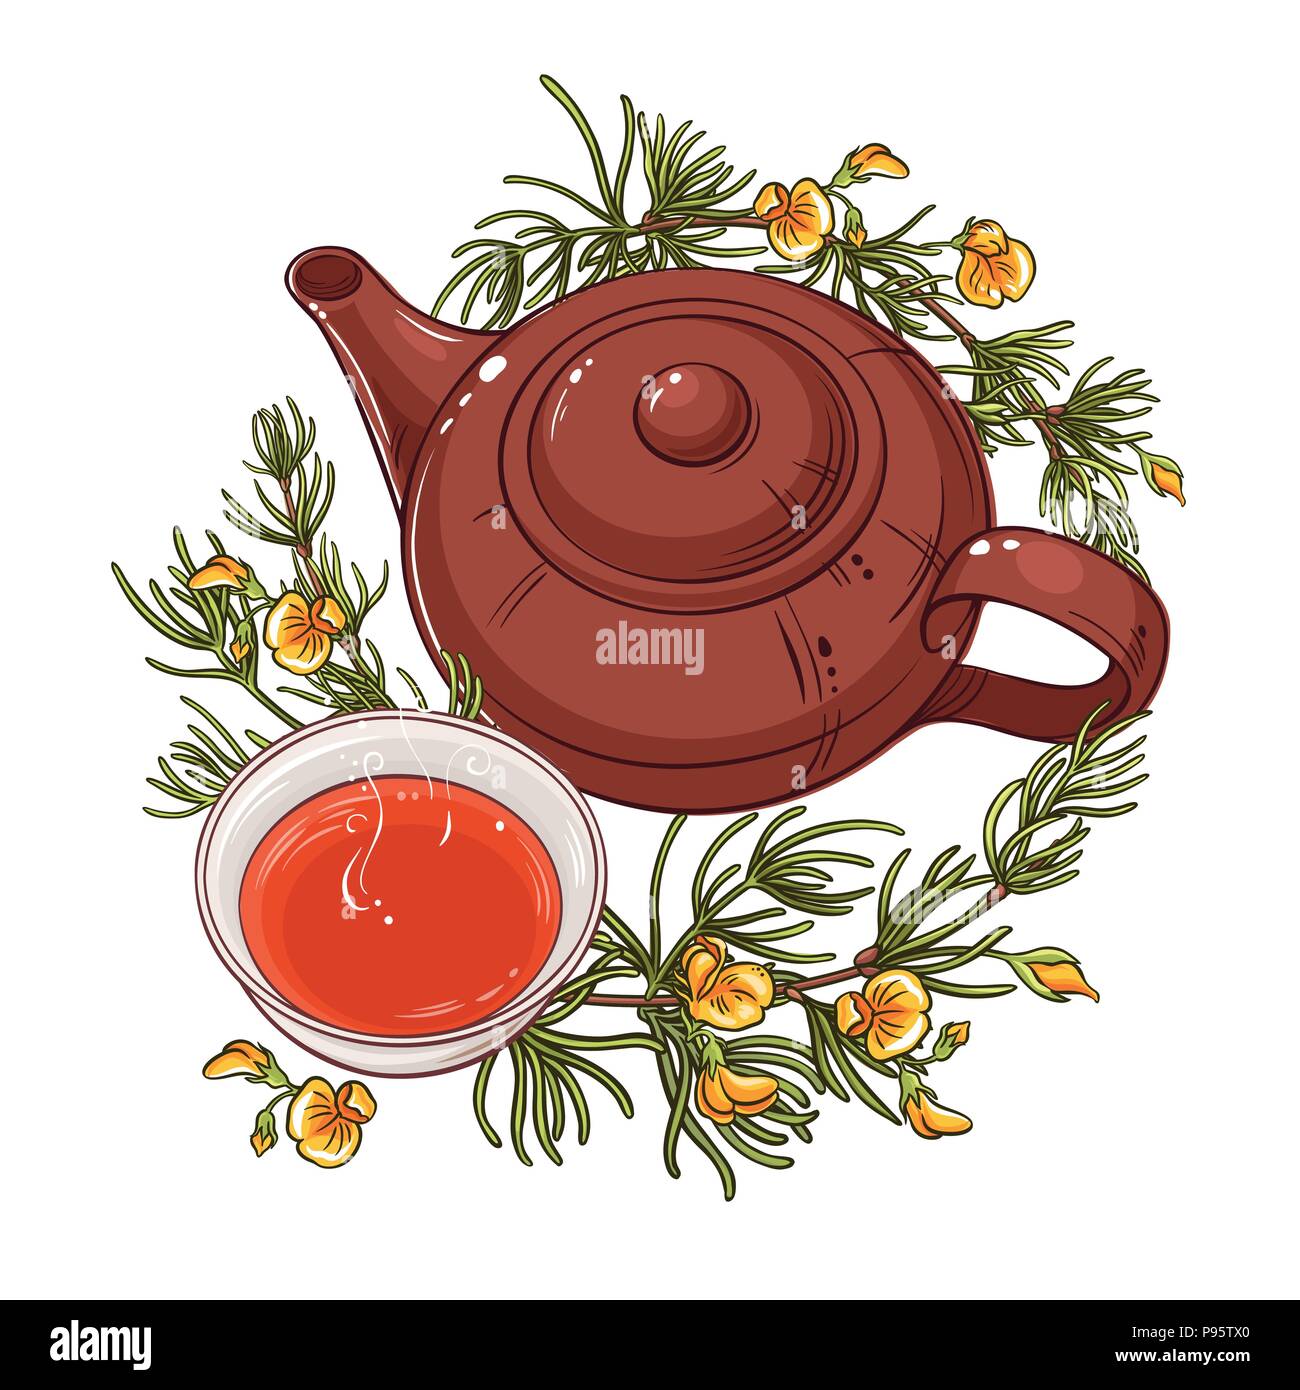 rooibos tea in teapot illustration on whte background Stock Vector